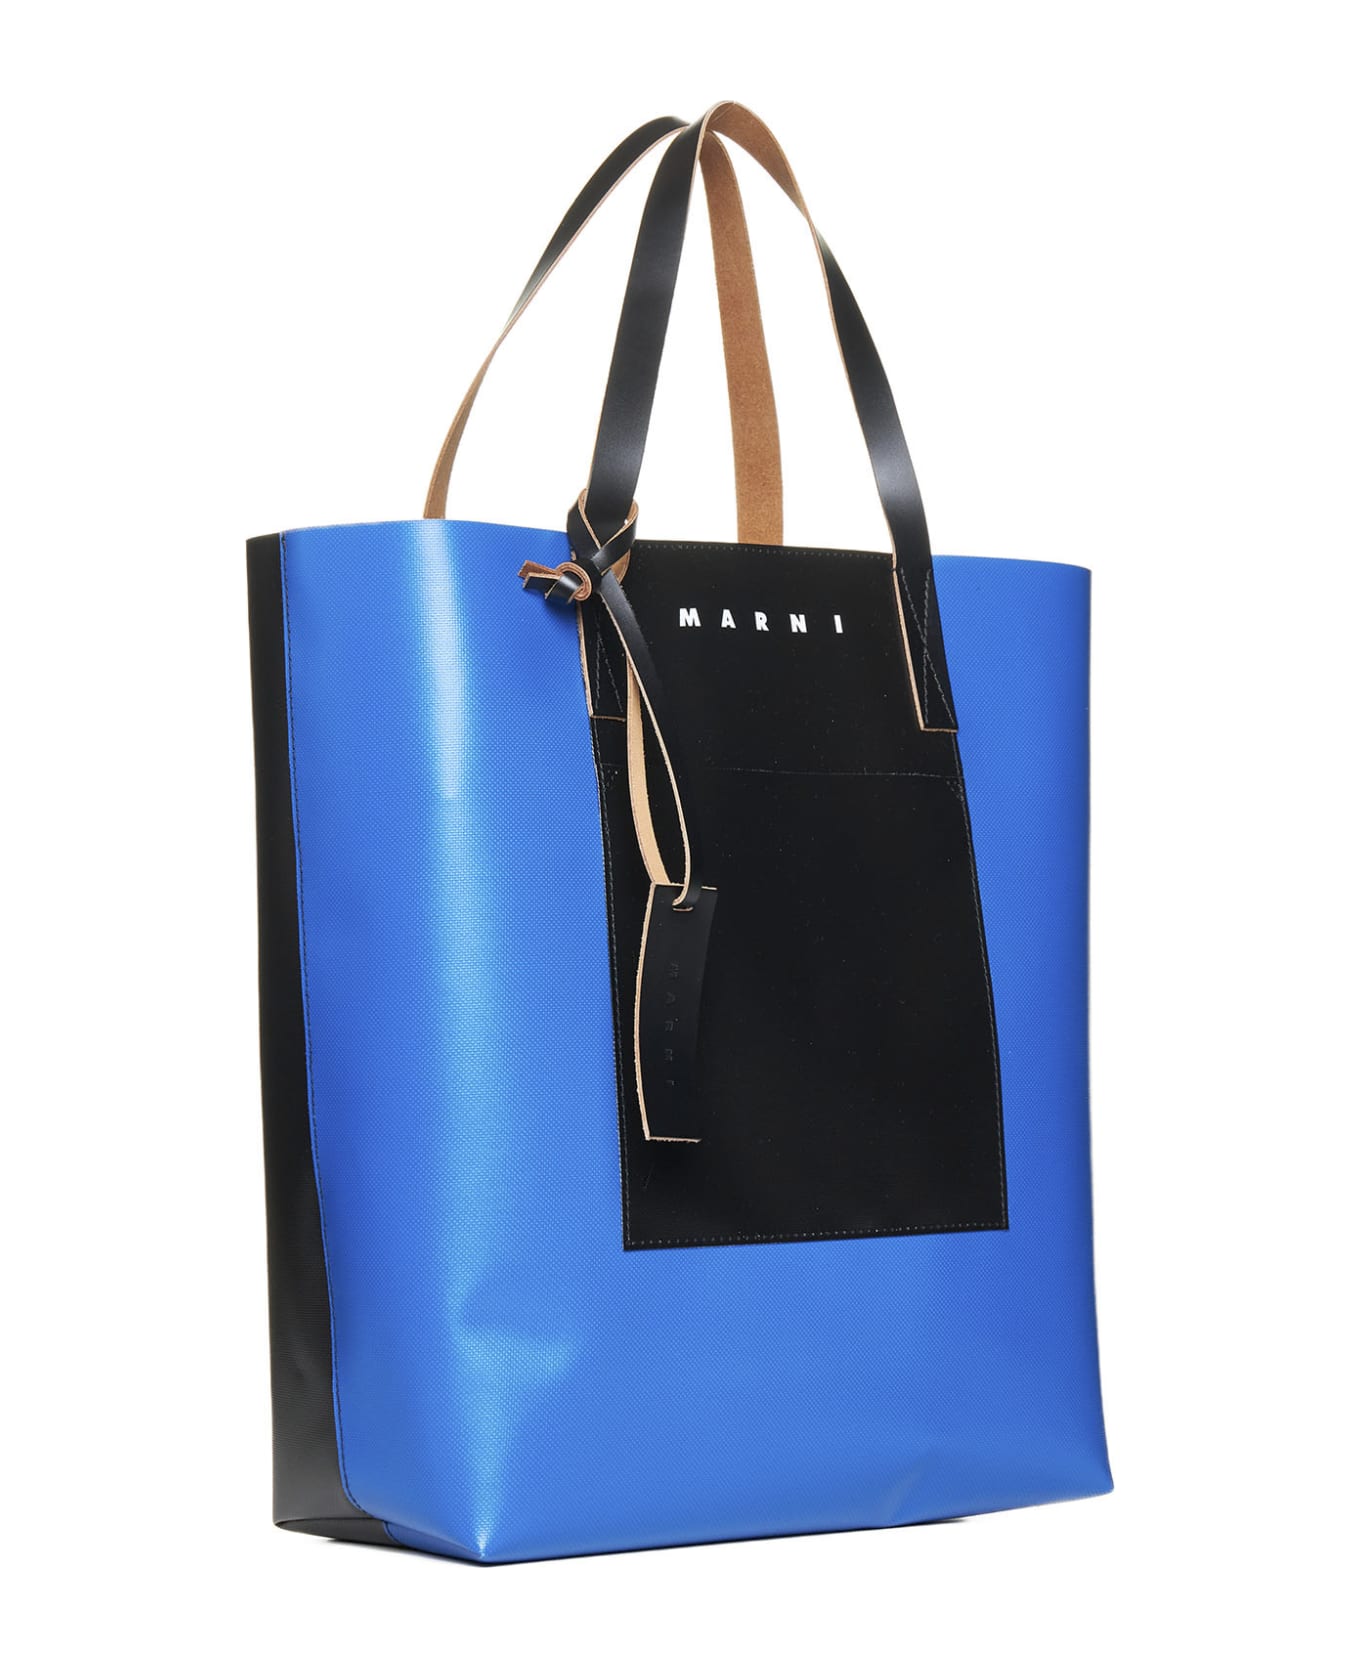 Marni Tribeca Shopping Bag - Royal black black